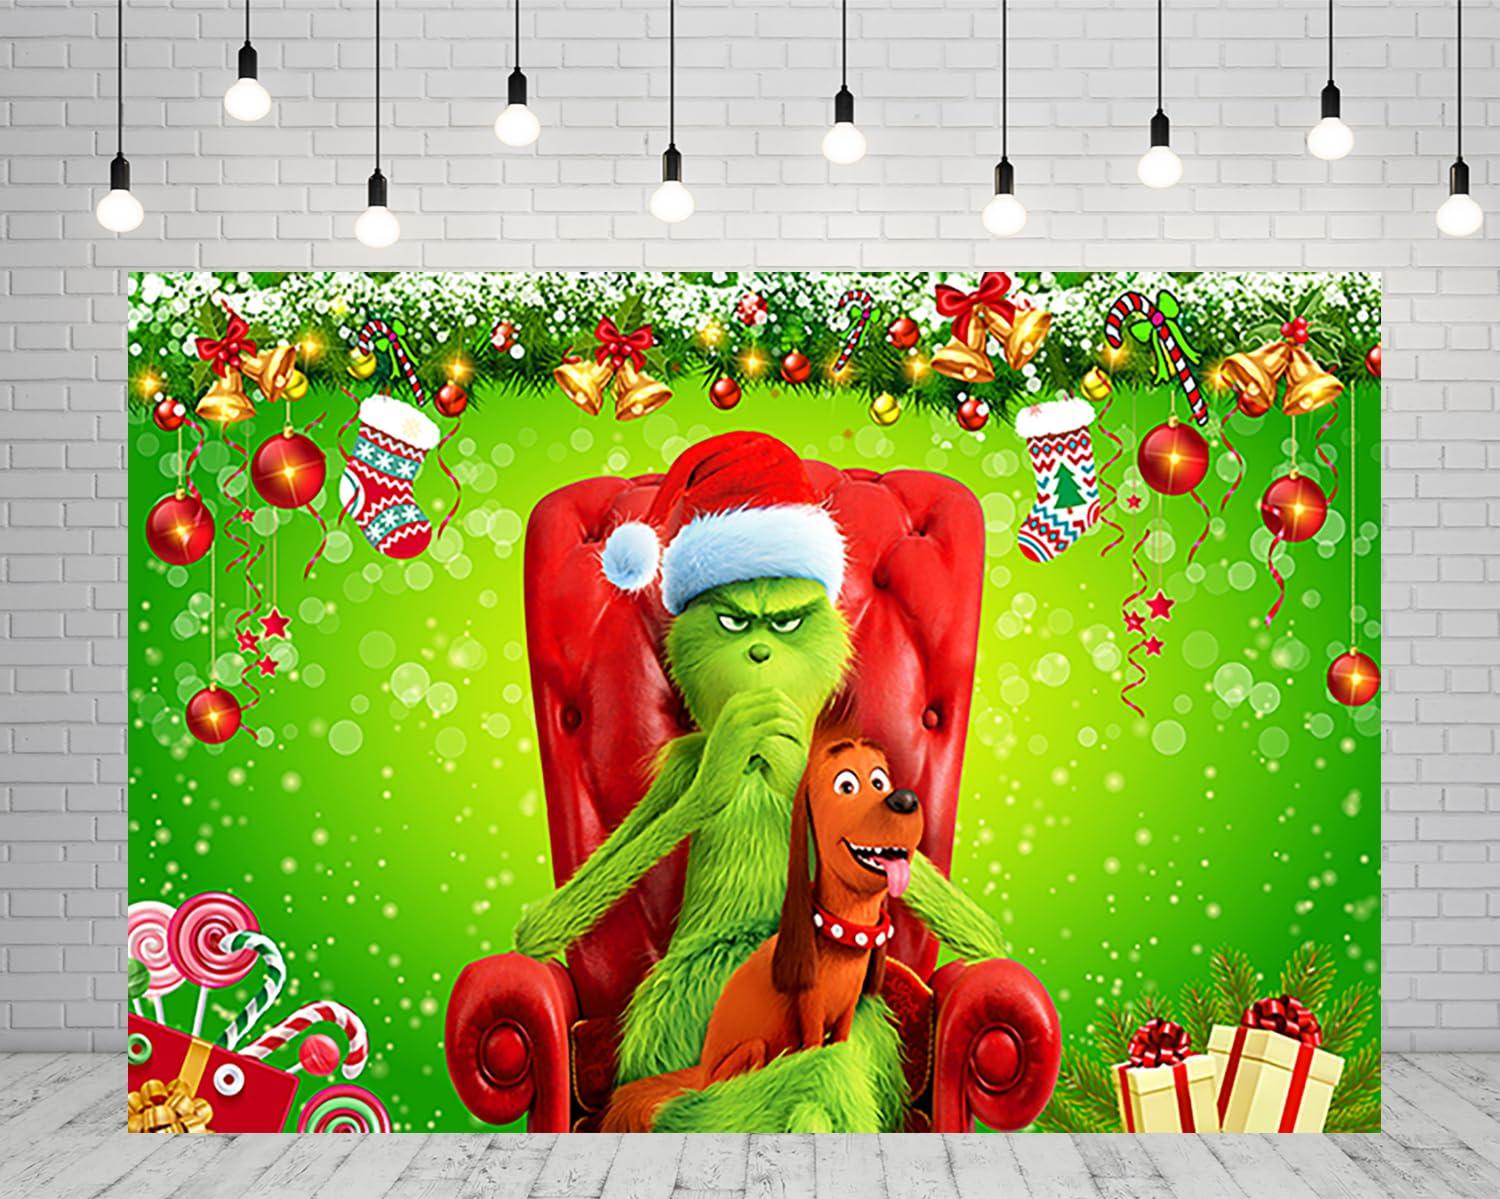 Amazoncom Christmas Backdrop for Grinch Christmas Theme Party